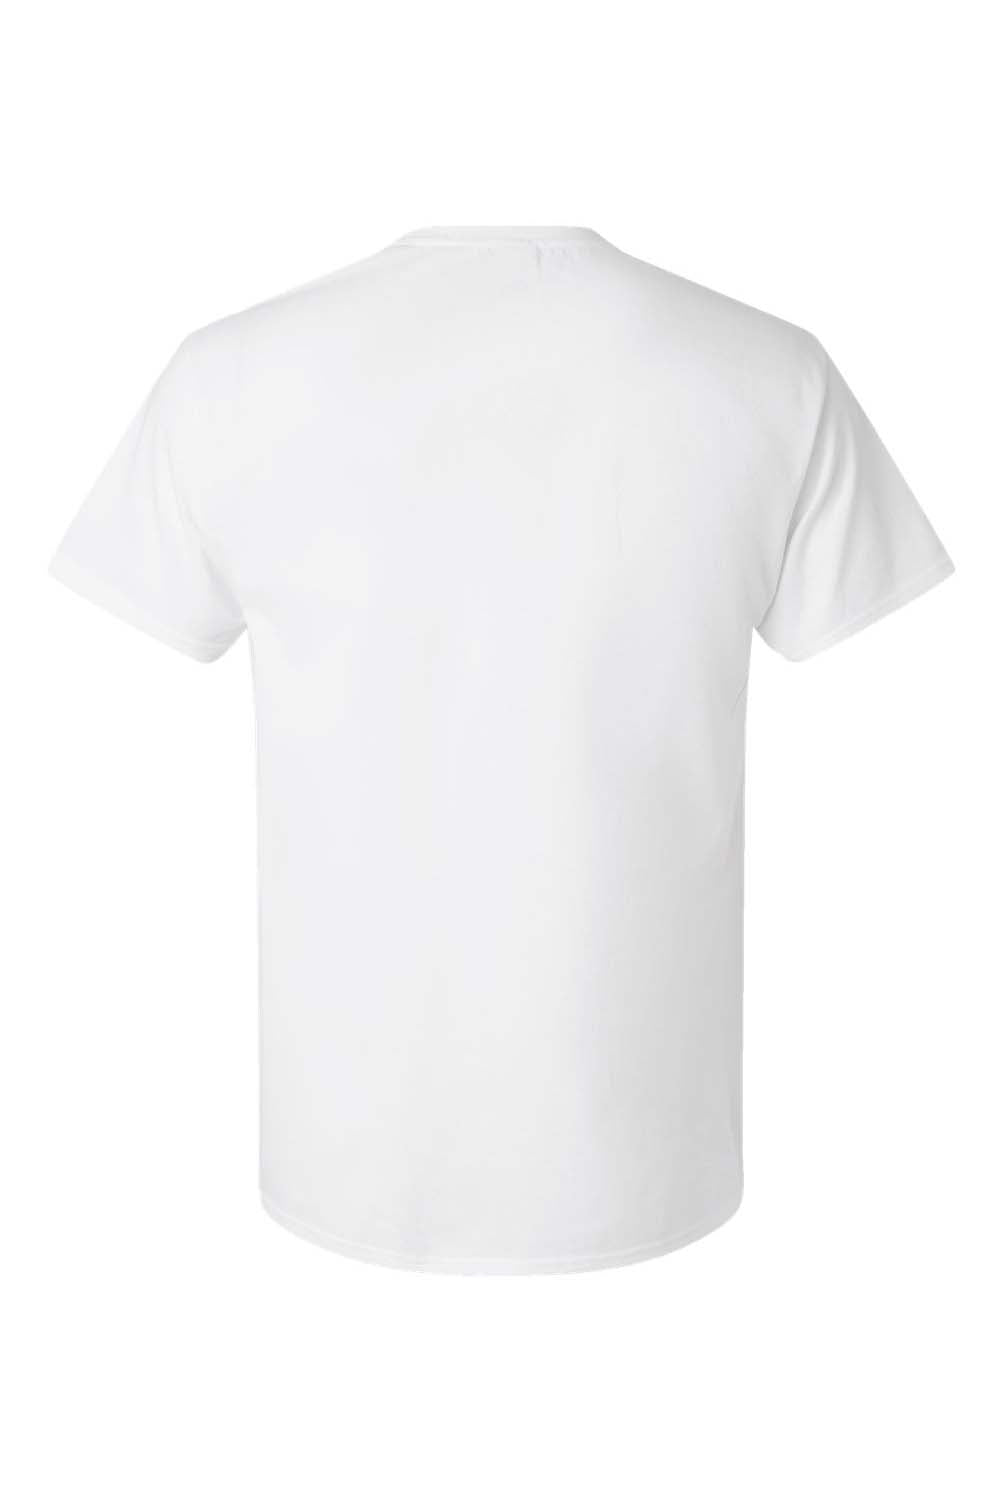 Hanes 5290P Mens Essential Short Sleeve Crewneck T-Shirt w/ Pocket White Flat Back